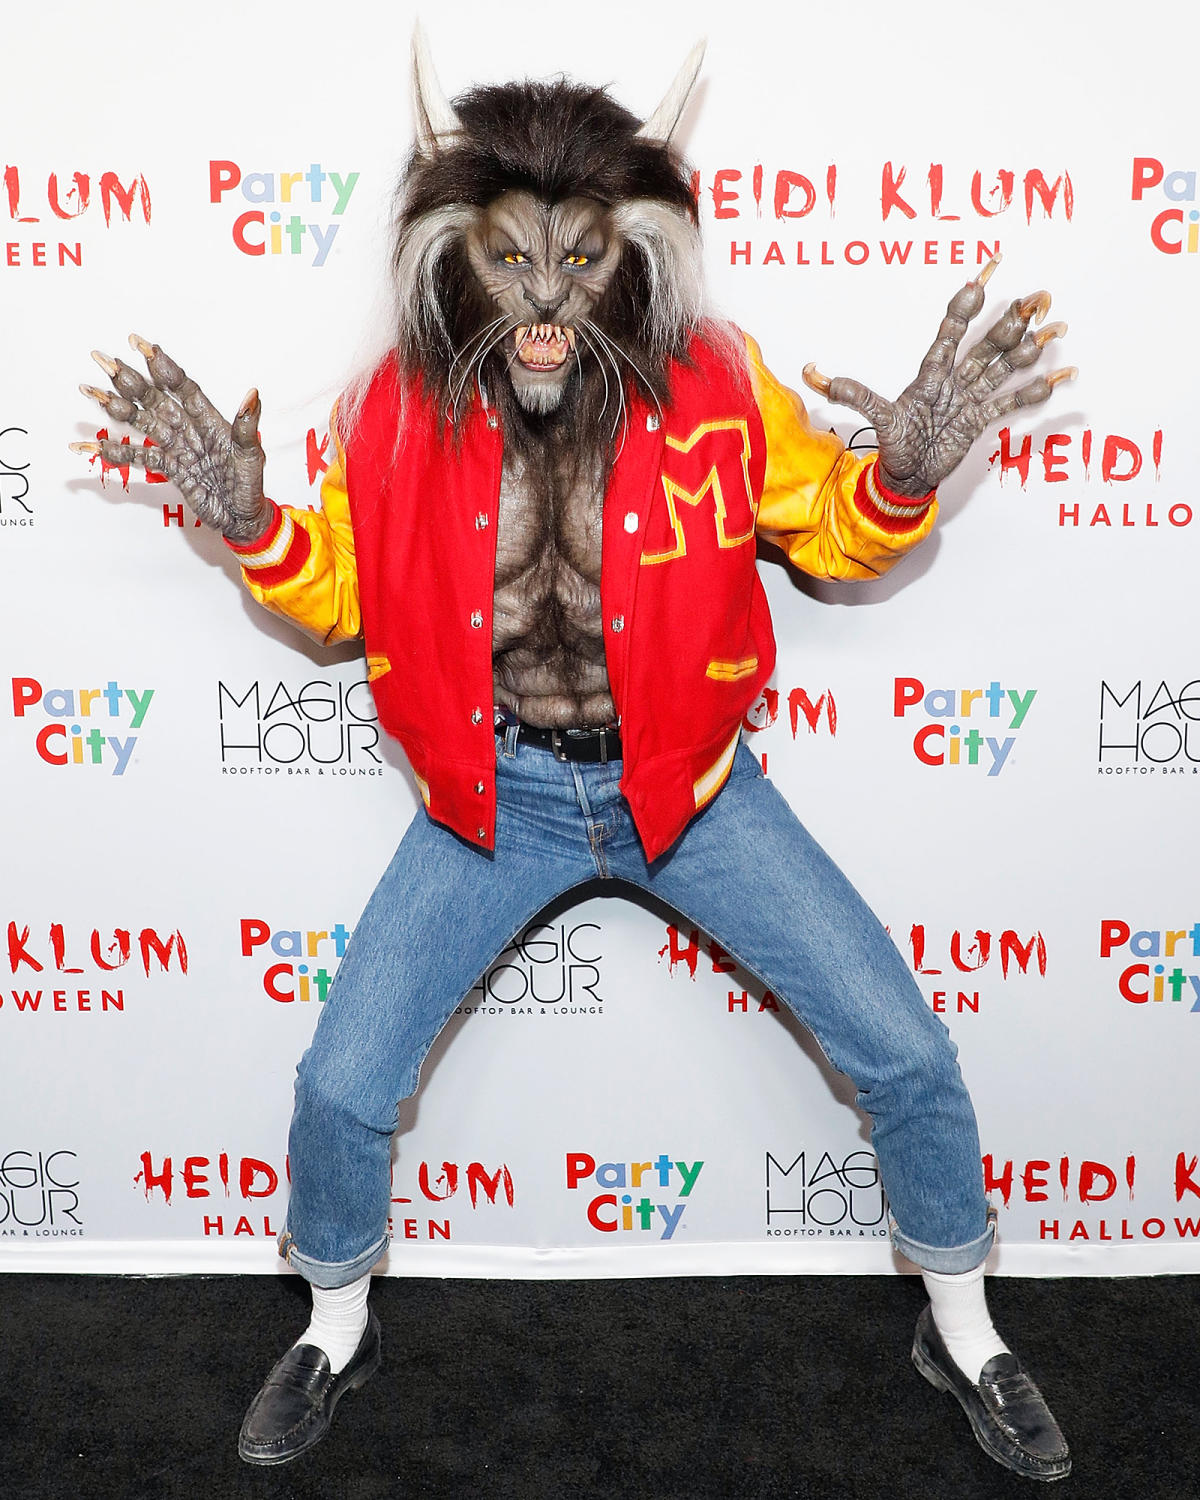 Heidi Klums Best Halloween Costumes Through the Years photo image